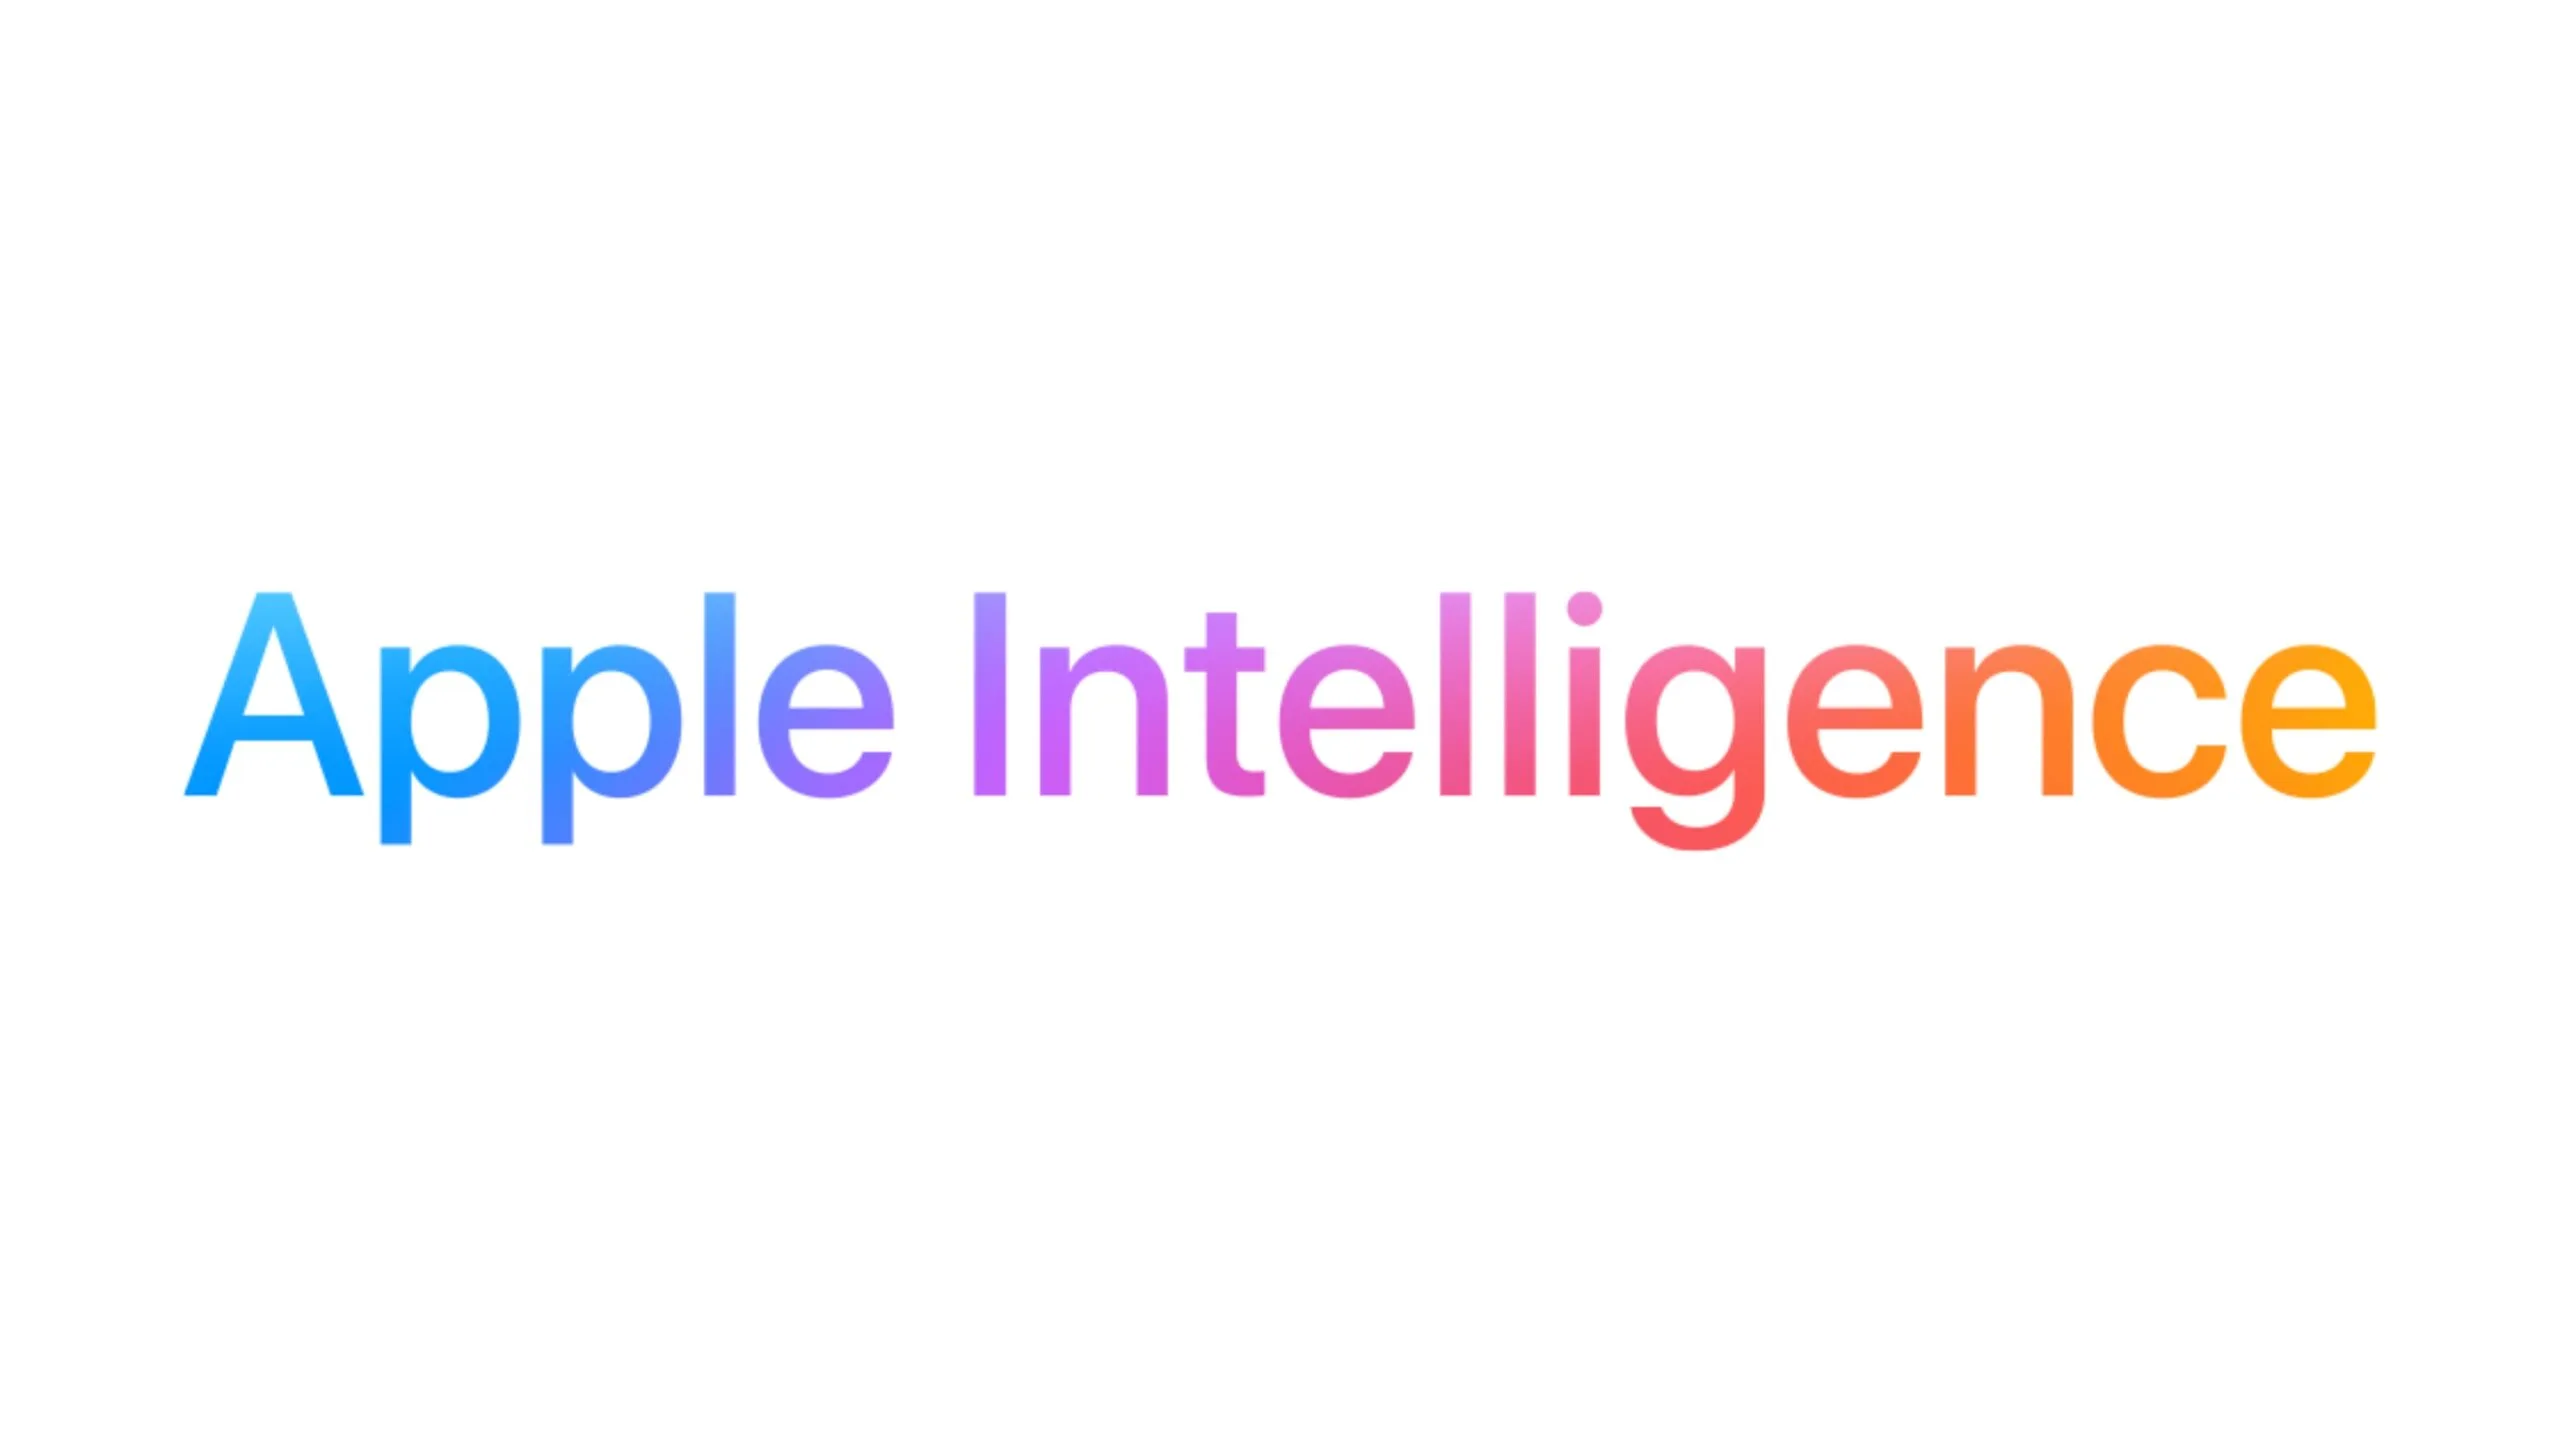 Imagem com a logomarca do Apple Intelligence